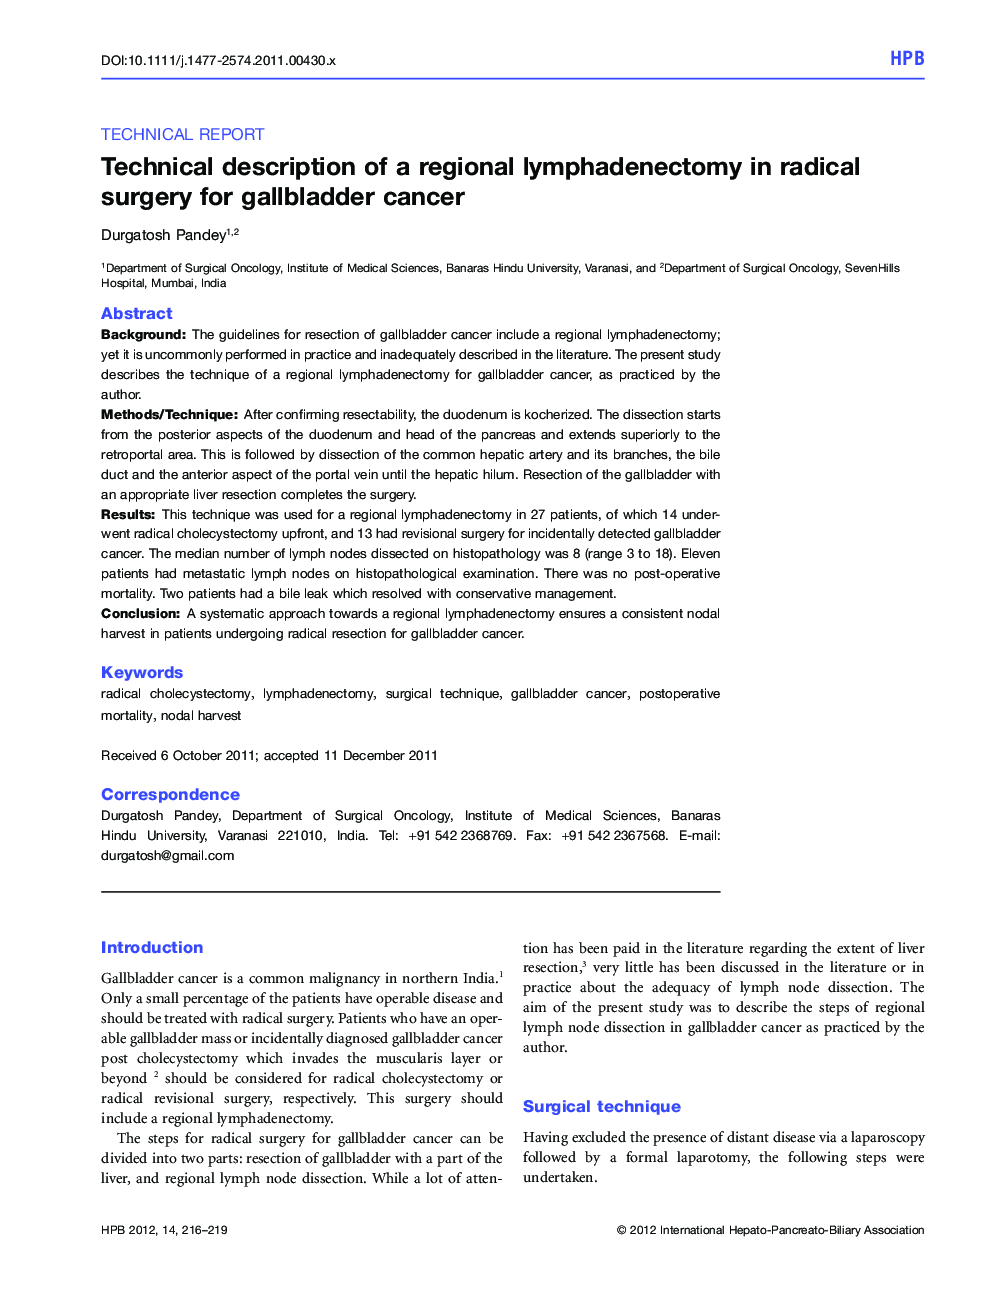 Technical description of a regional lymphadenectomy in radical surgery for gallbladder cancer